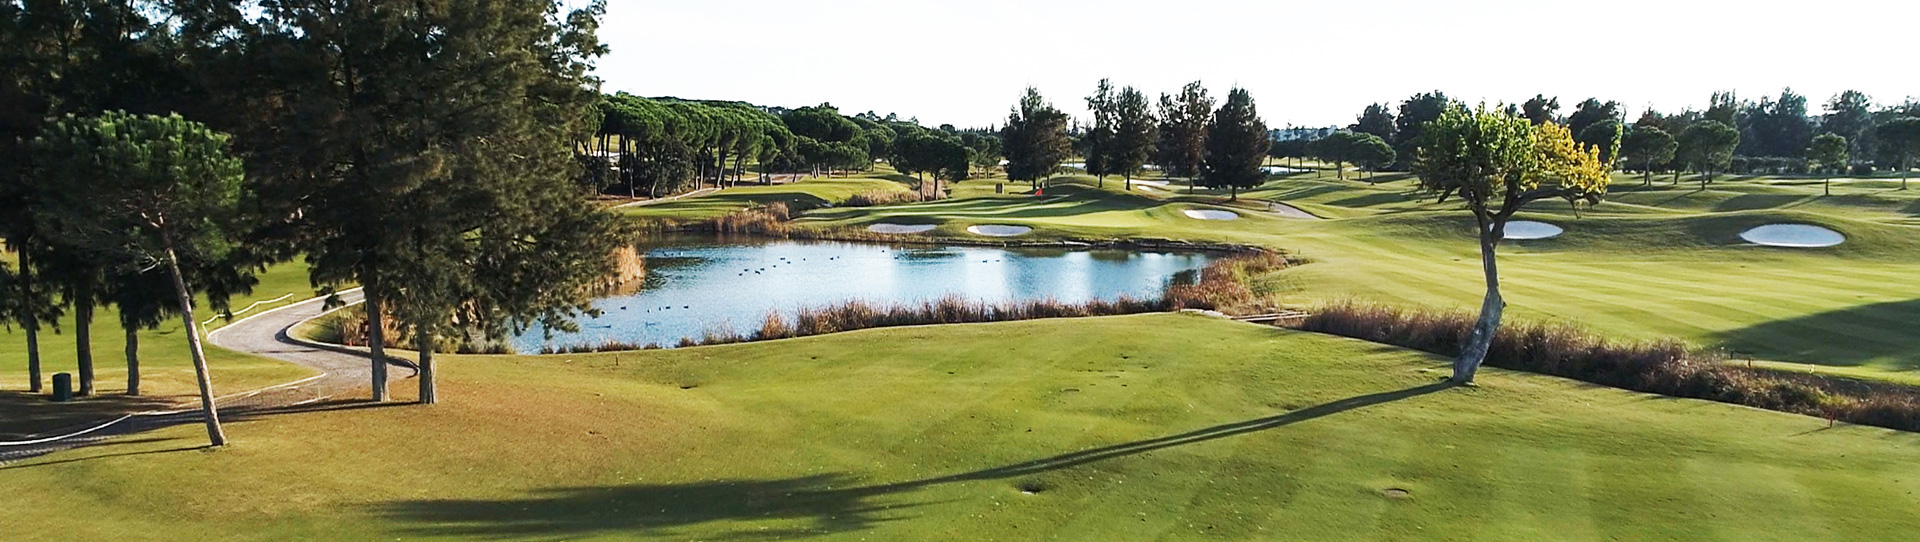 Portugal golf courses - Laranjal Golf Course - Photo 3